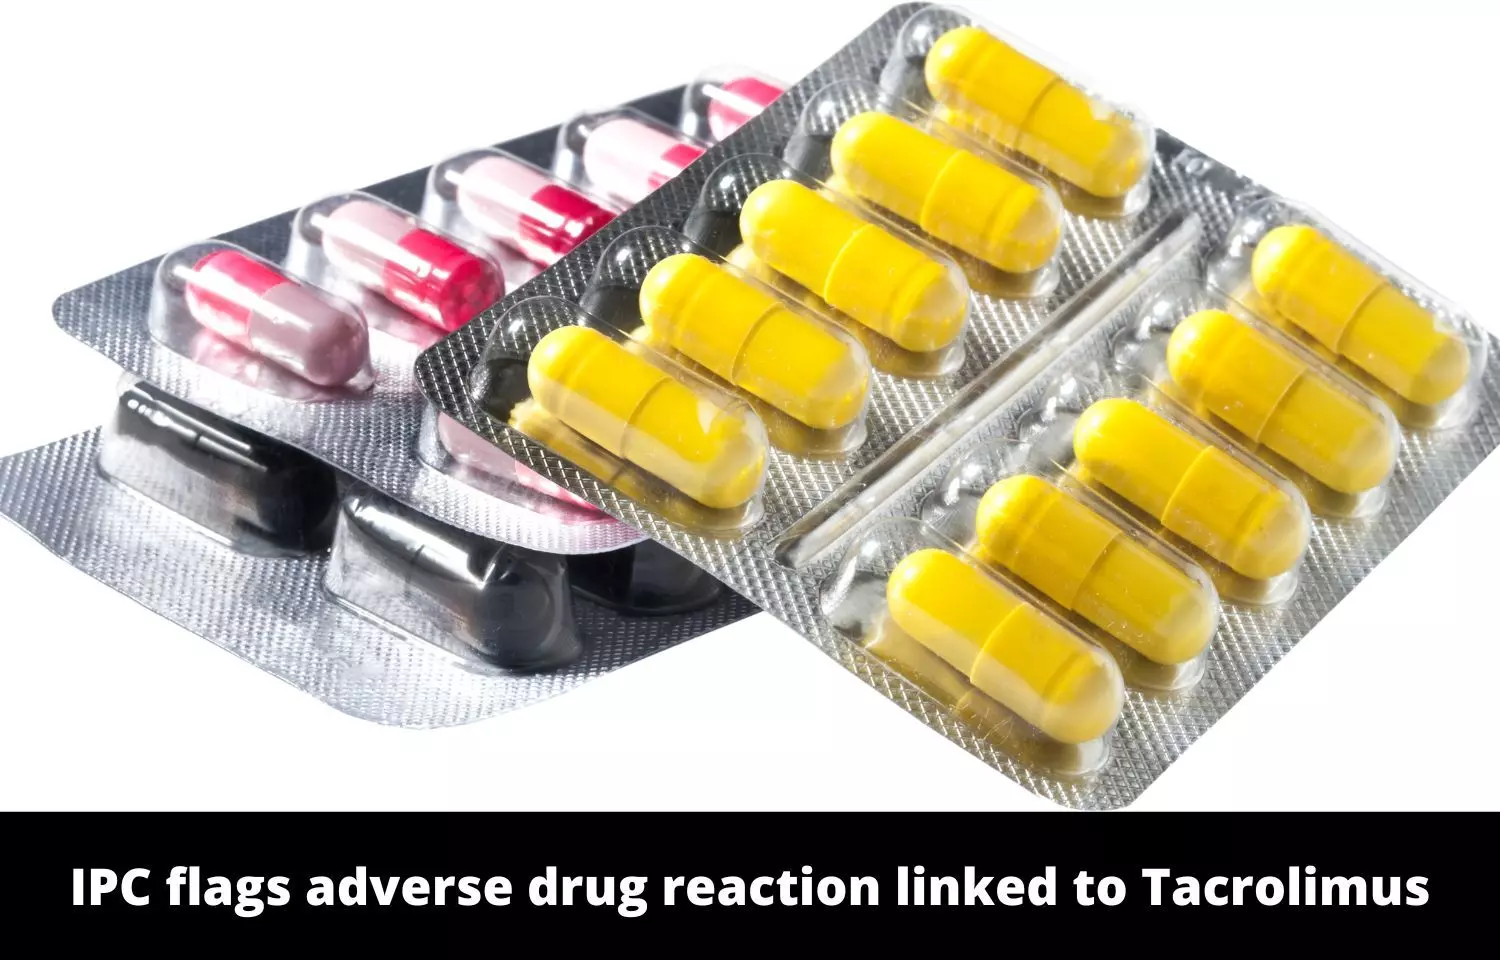 Drug Safety Alert: IPC flags adverse drug reaction linked to Tacrolimus